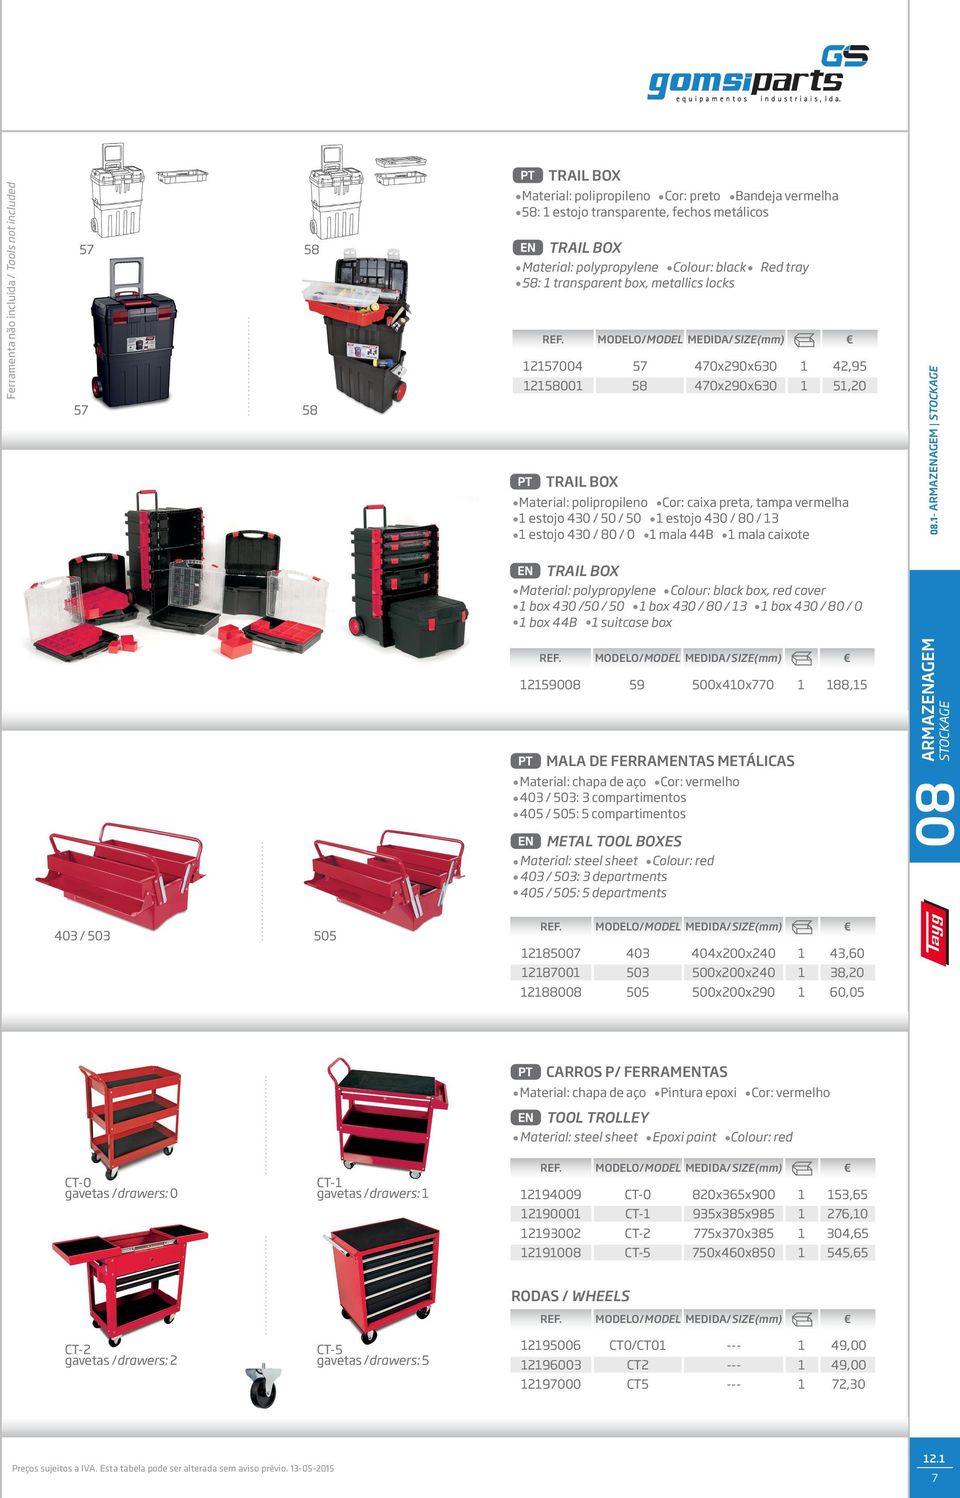 - ARMAZENAGEM TRAIL BOX Material: polypropylene Colour: black box, red cover box 0 /0 / 0 box 0 / 80 / box 0 / 80 / 0 box B suitcase box 29008 9 00x0x770 88, MALA DE FERRAMENTAS METÁLICAS Material: